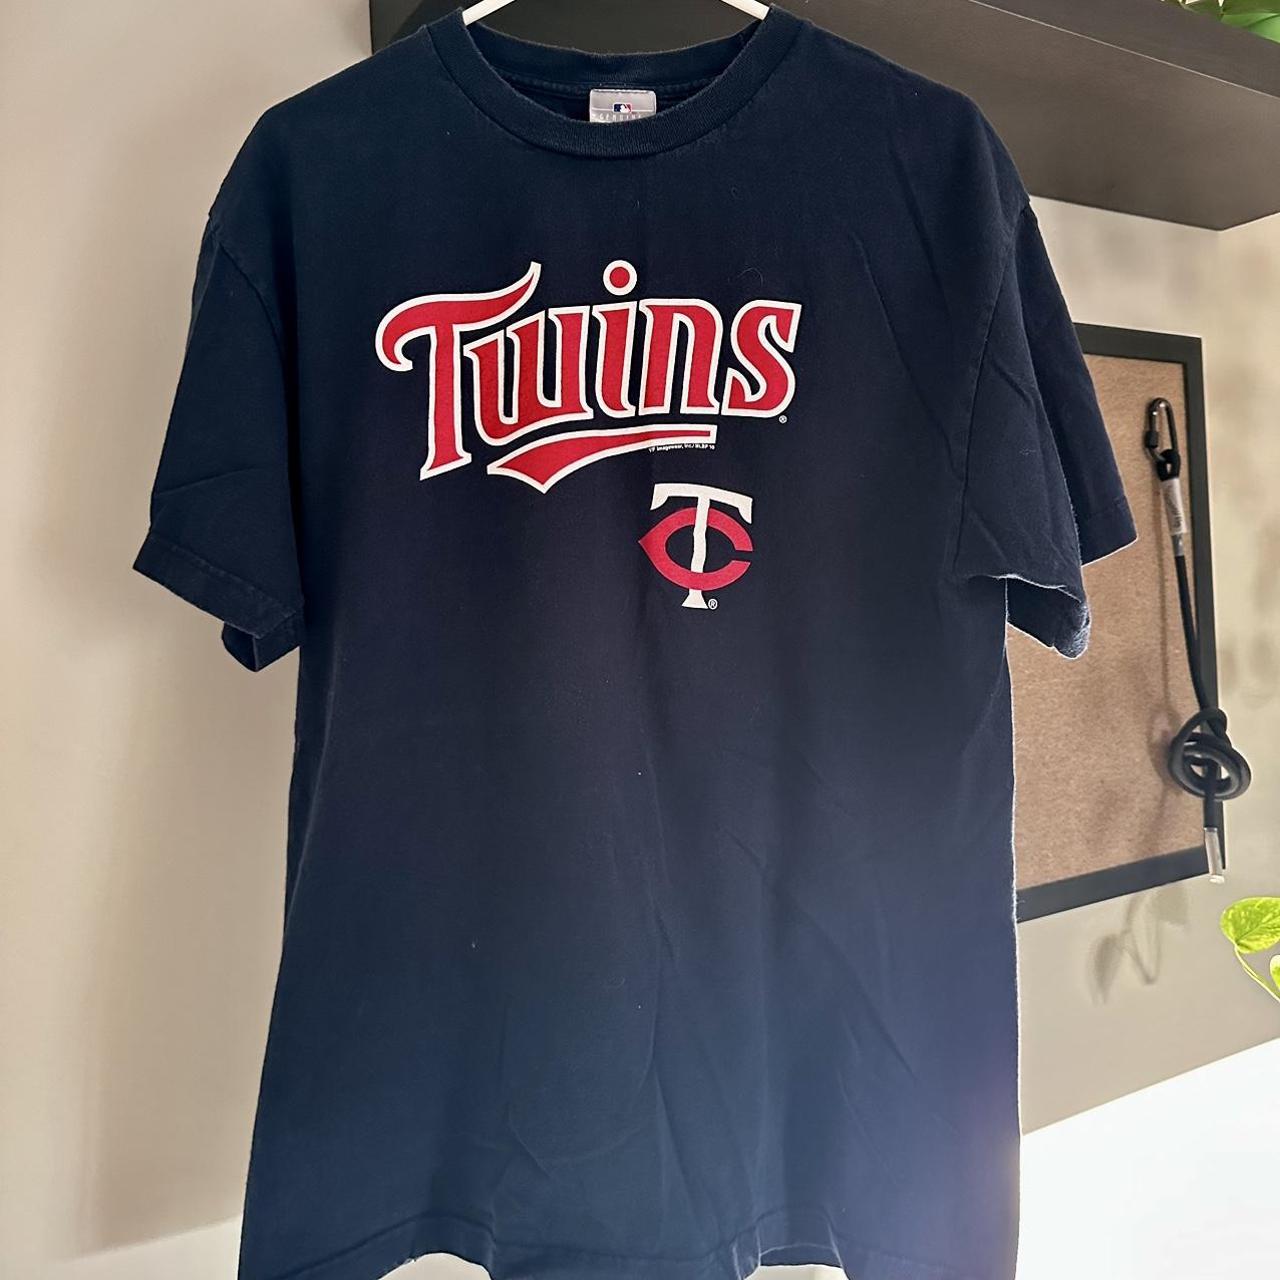 MLB Men's T-Shirt - Navy - M